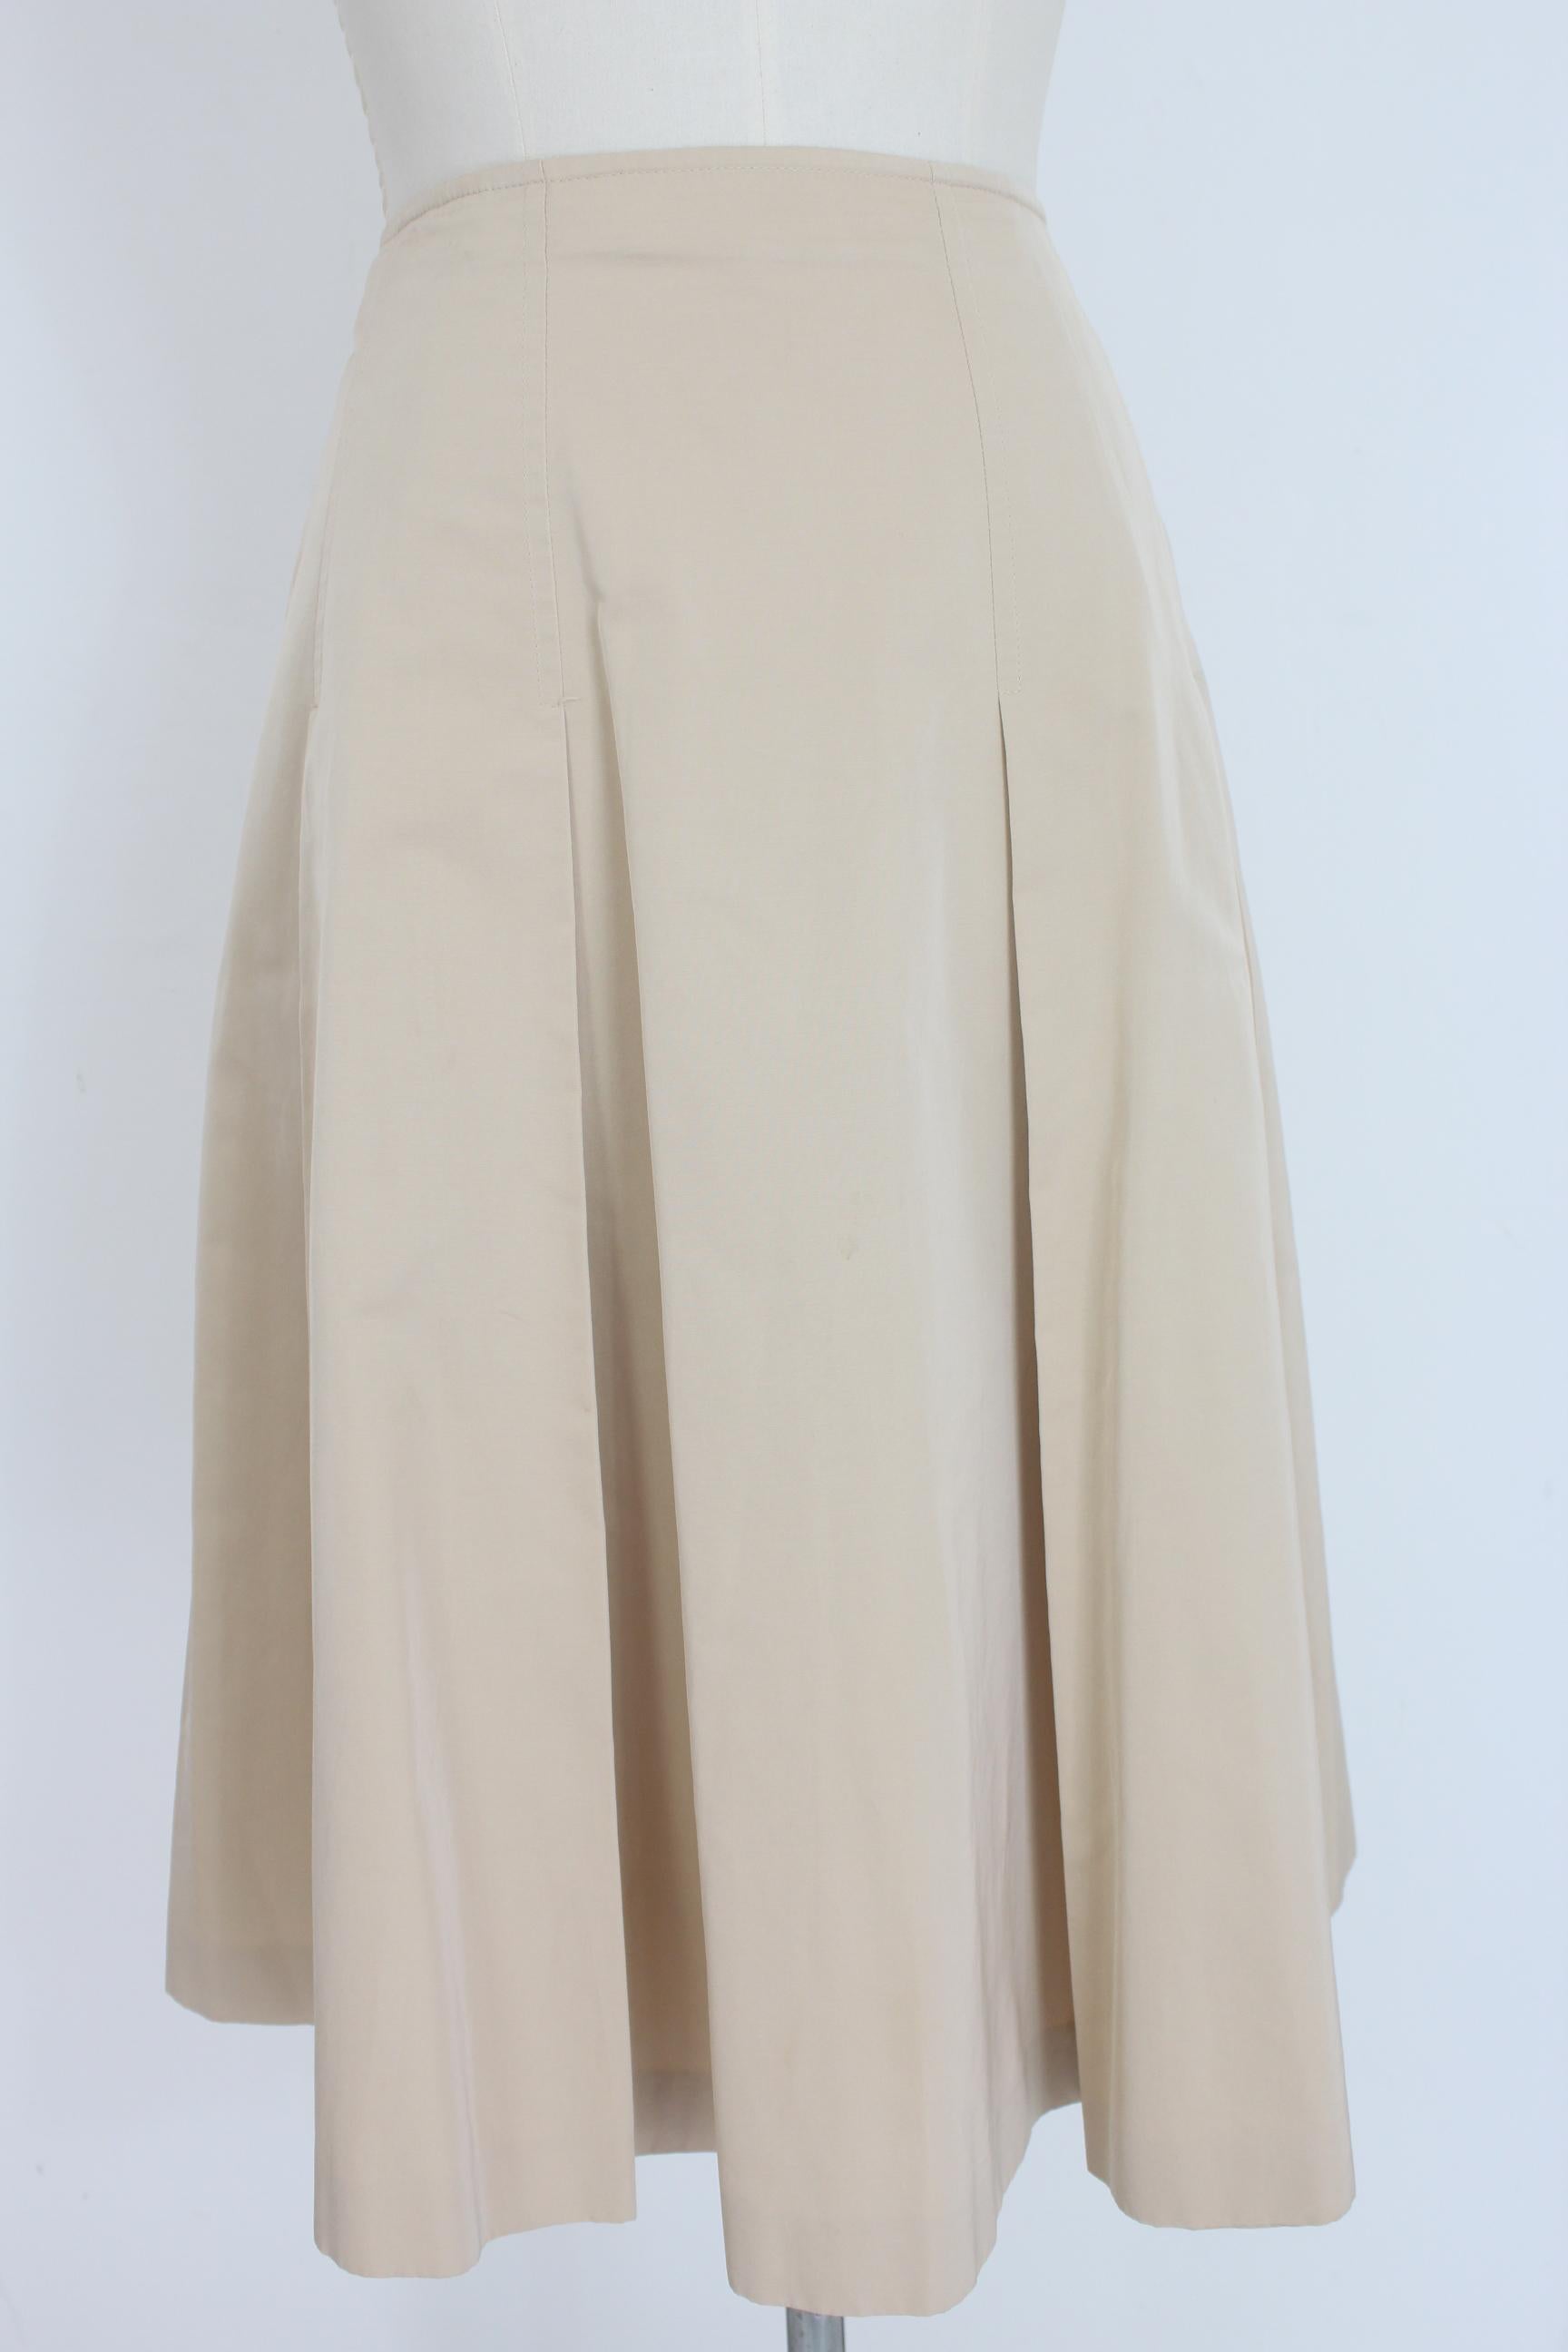 Max Mara Beige Cotton Suit Skirt  In Excellent Condition In Brindisi, Bt